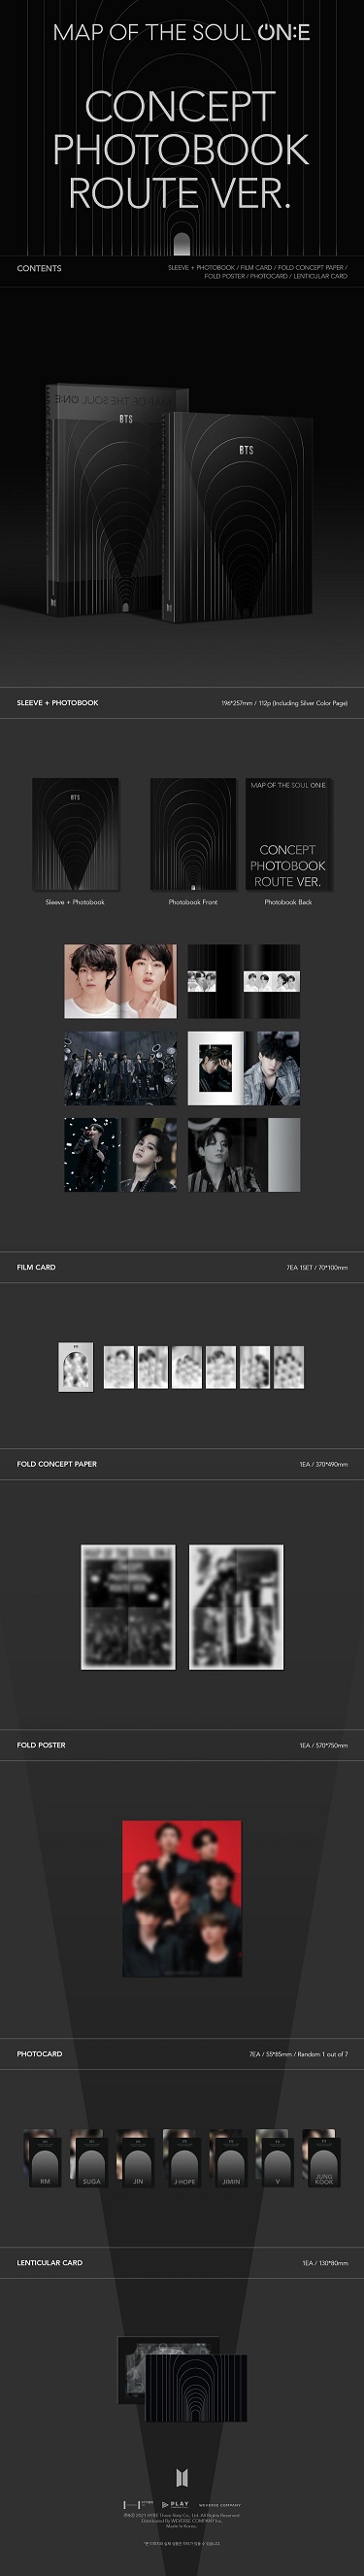 Buy ON:E Concept Photobook - Route Version now!